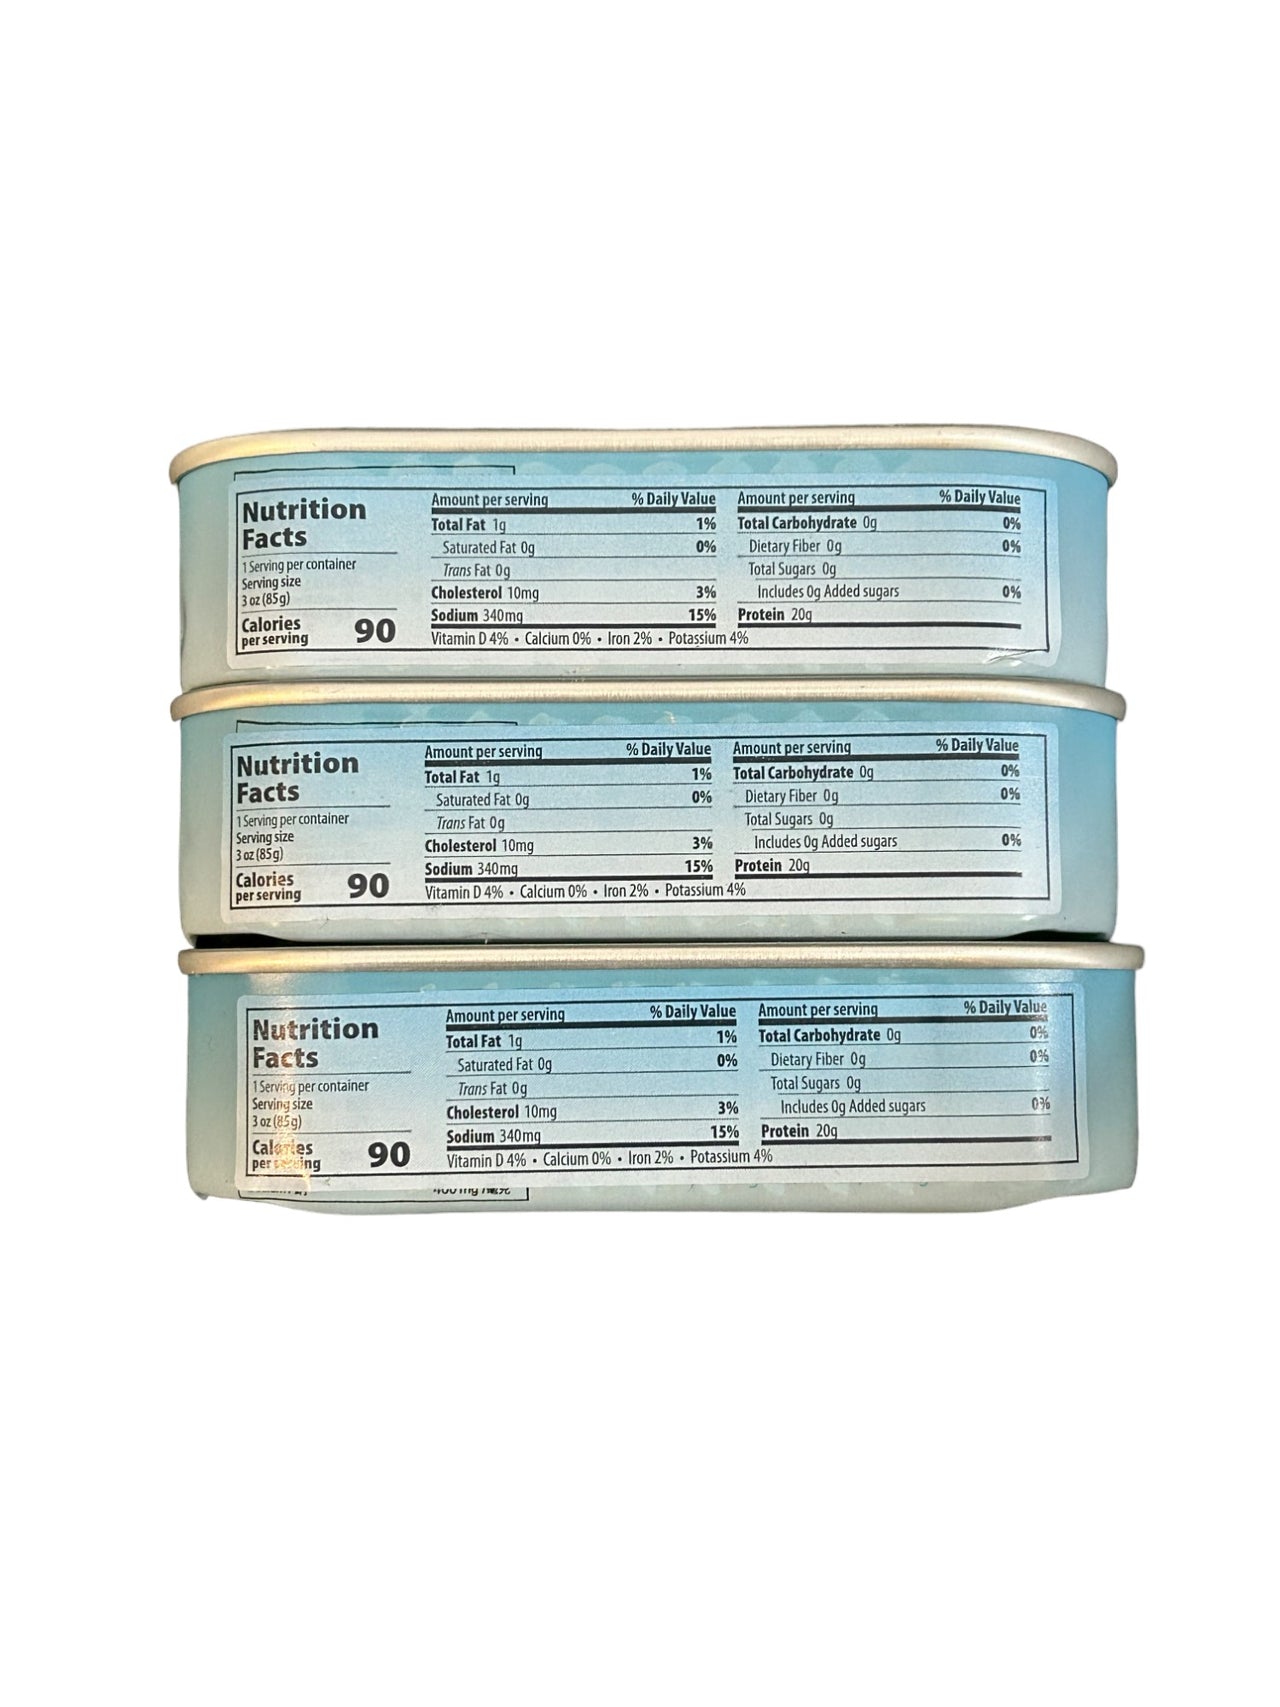 Porthos Tuna in Brine - 3 Pack (2024 New Packaging)